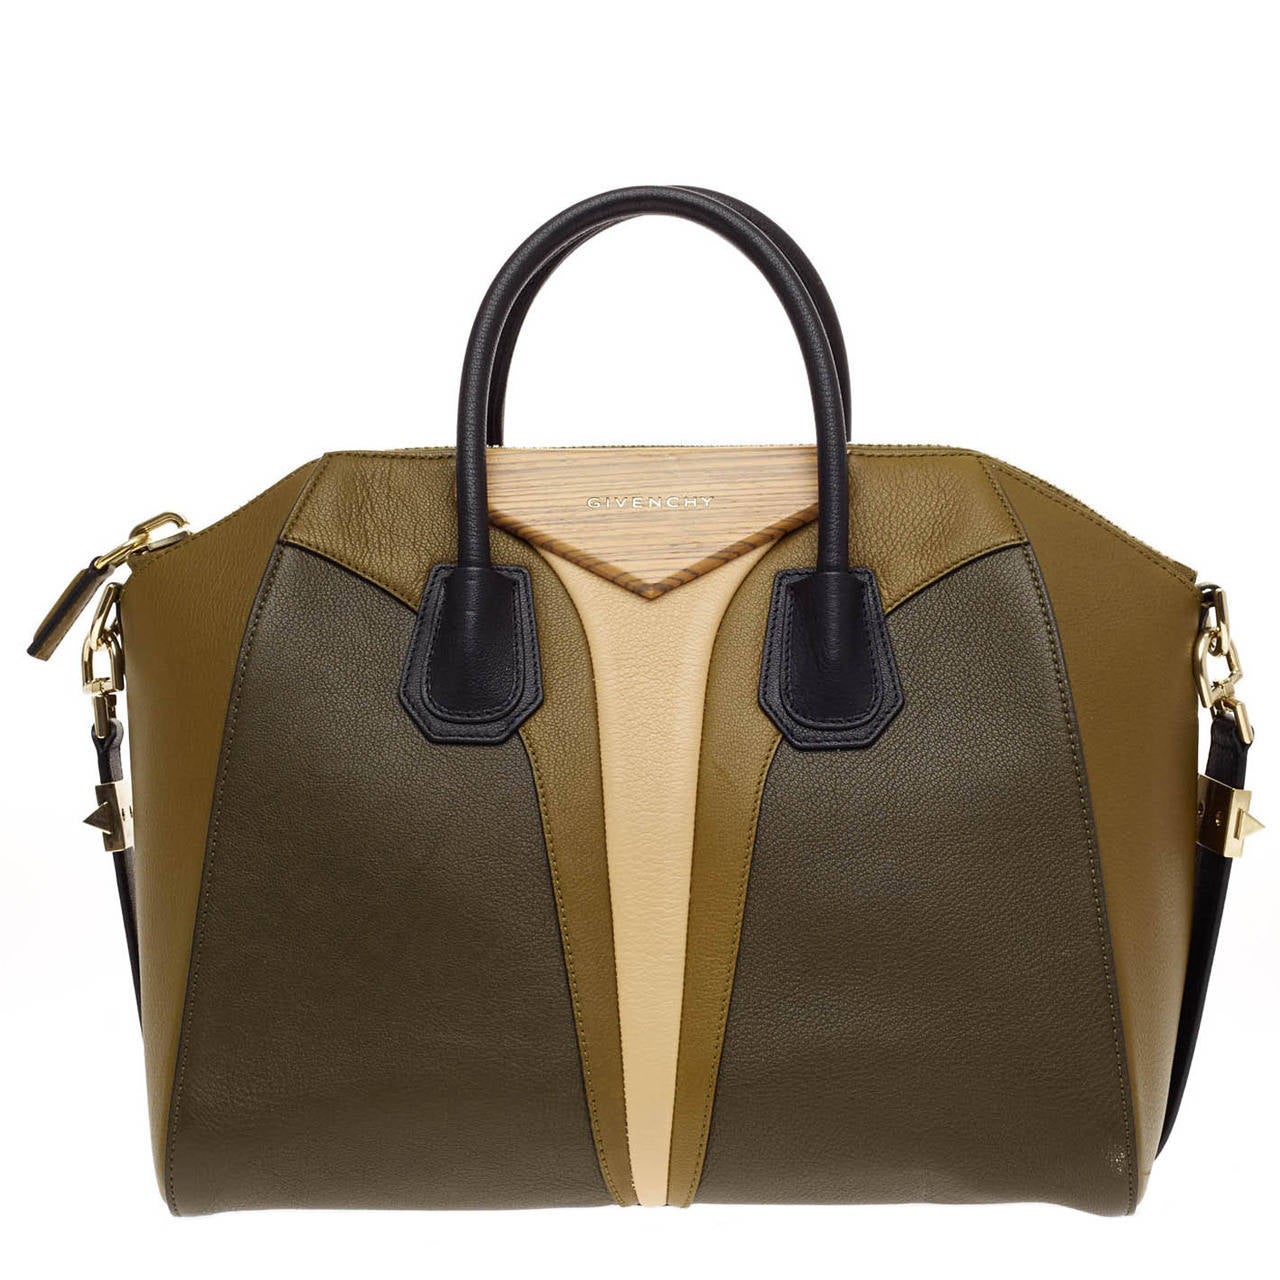 Givenchy Antigona Bag Leather Tricolor Medium at 1stdibs